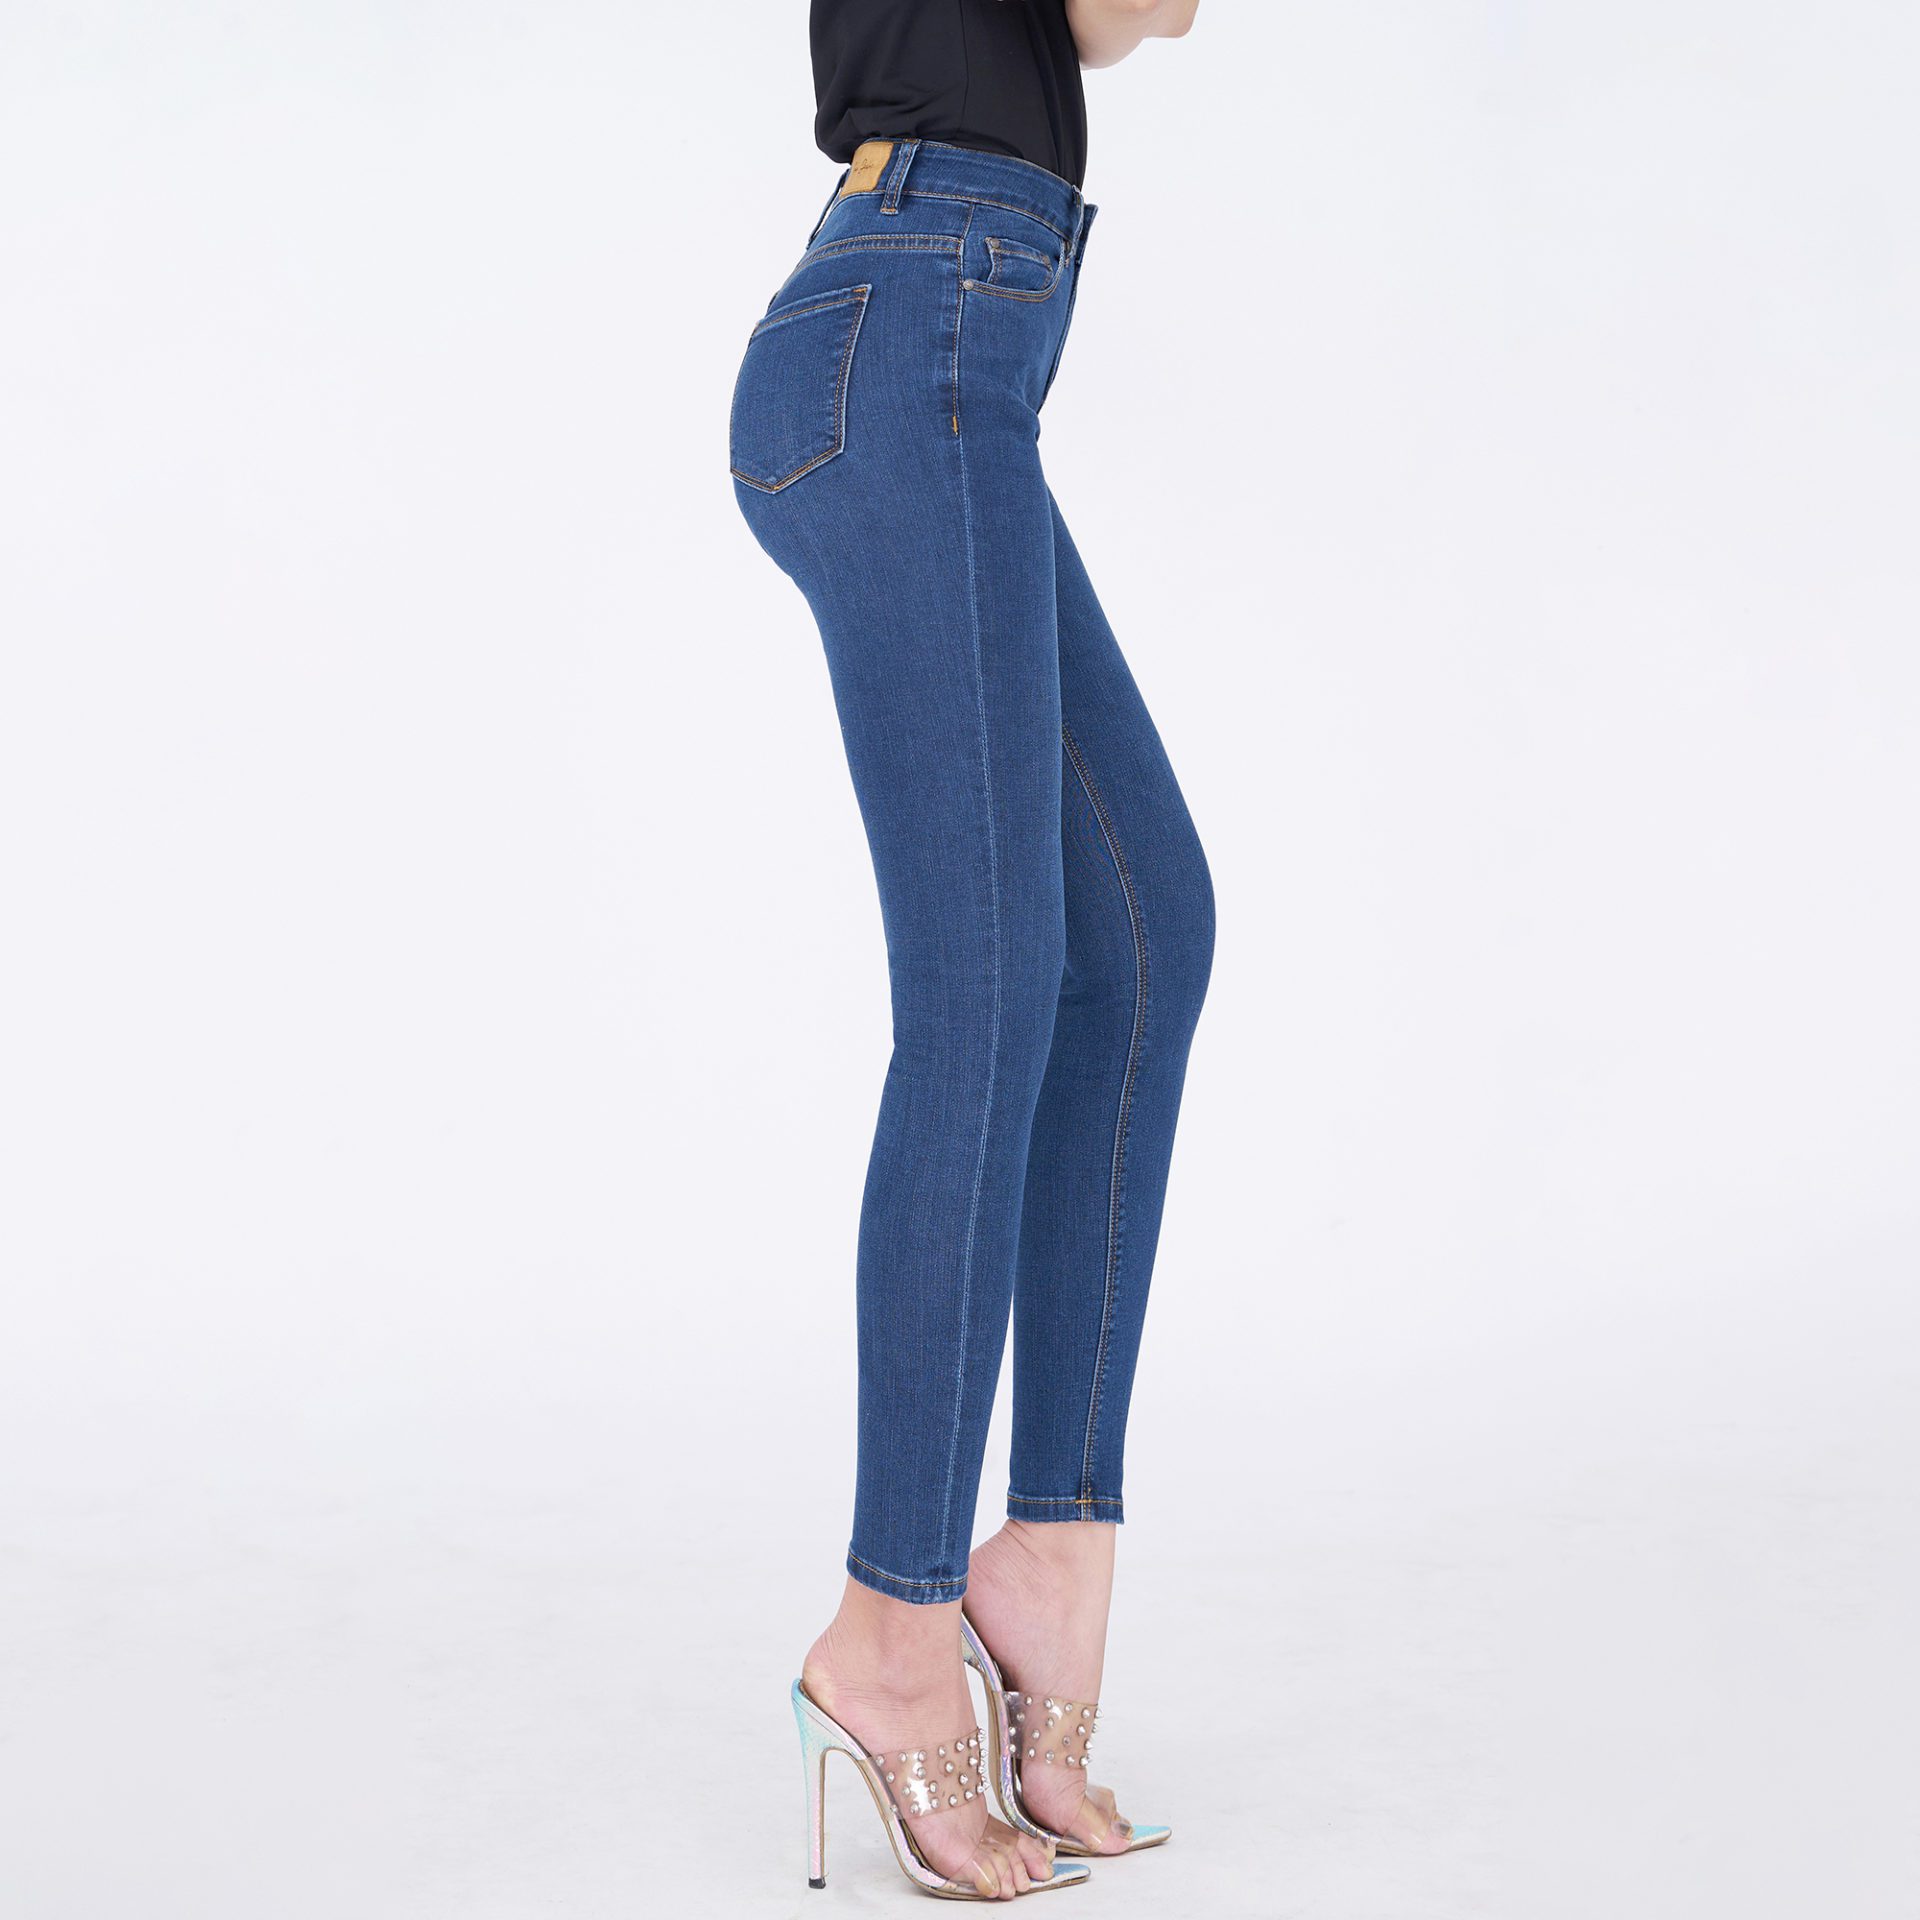 quần jeans nữ skinny xanh sapphire